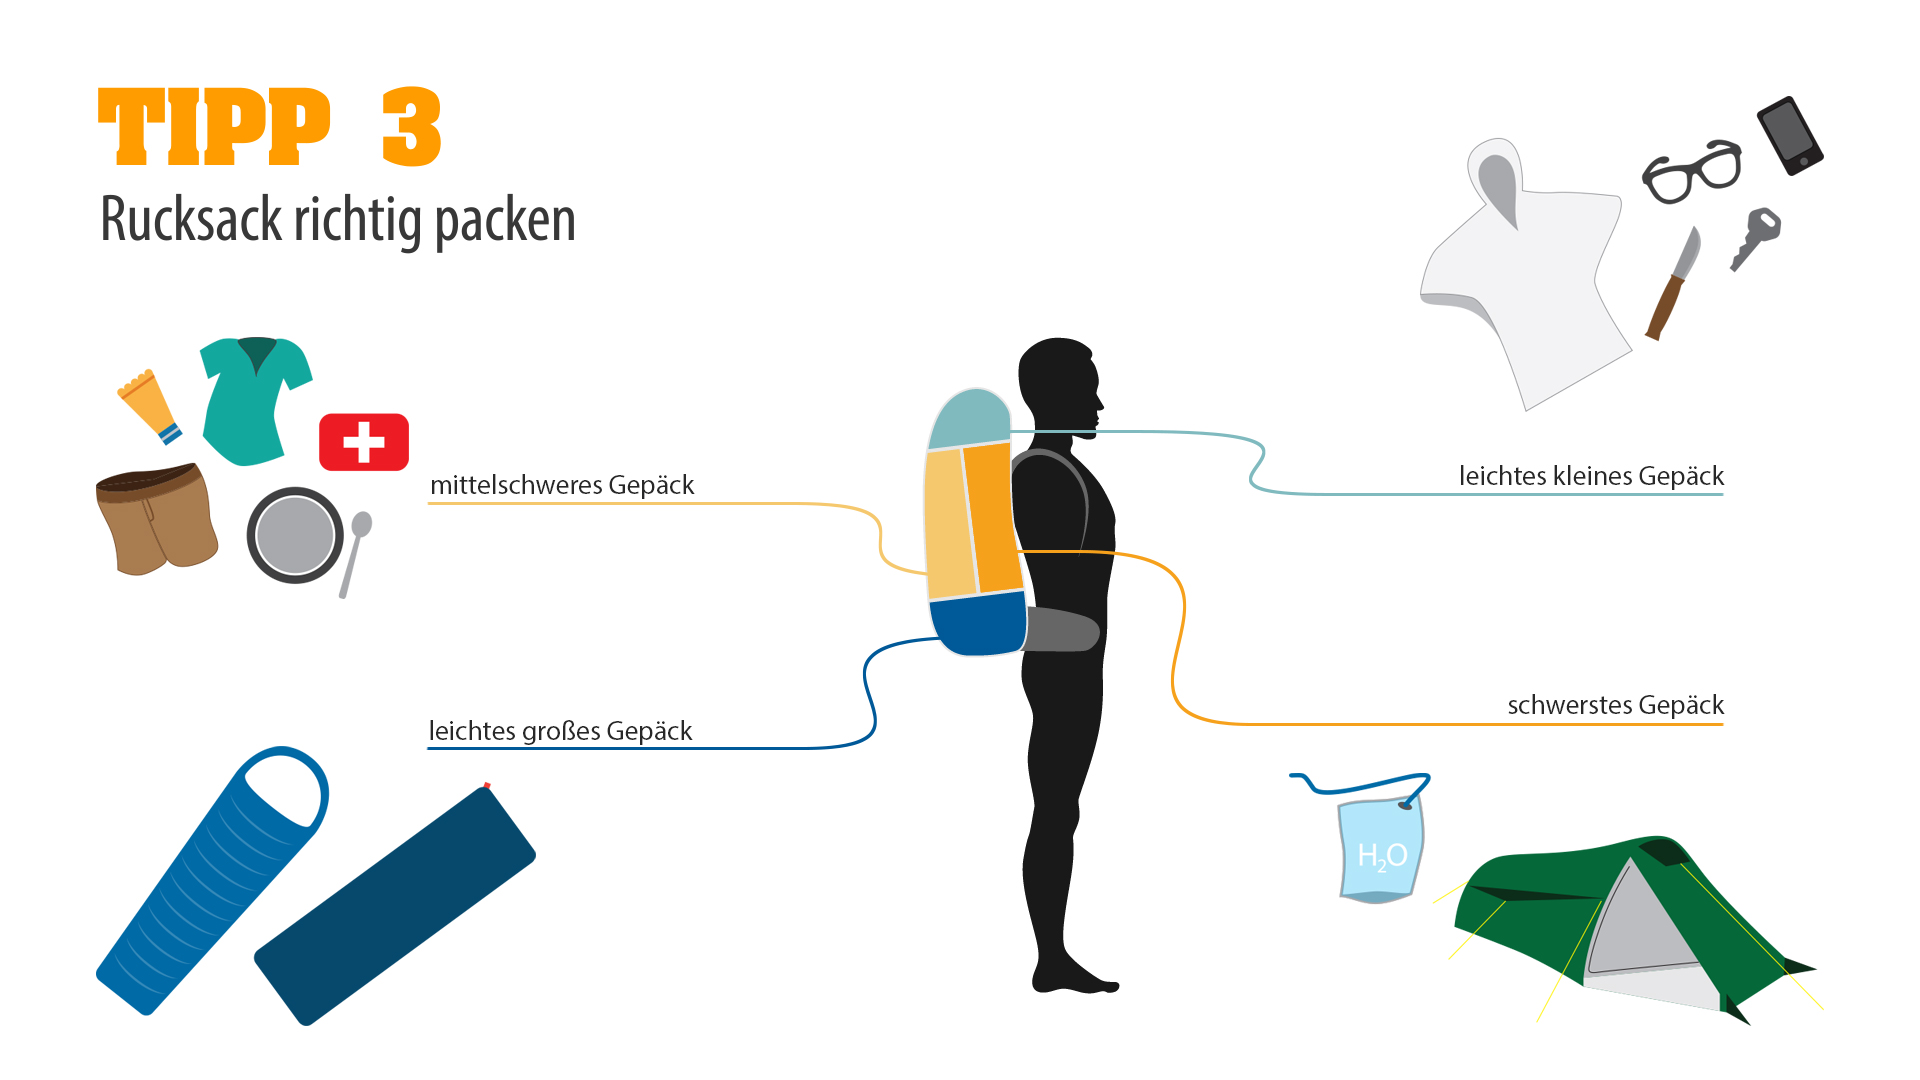 Tipp 3: Rucksack richtig packen